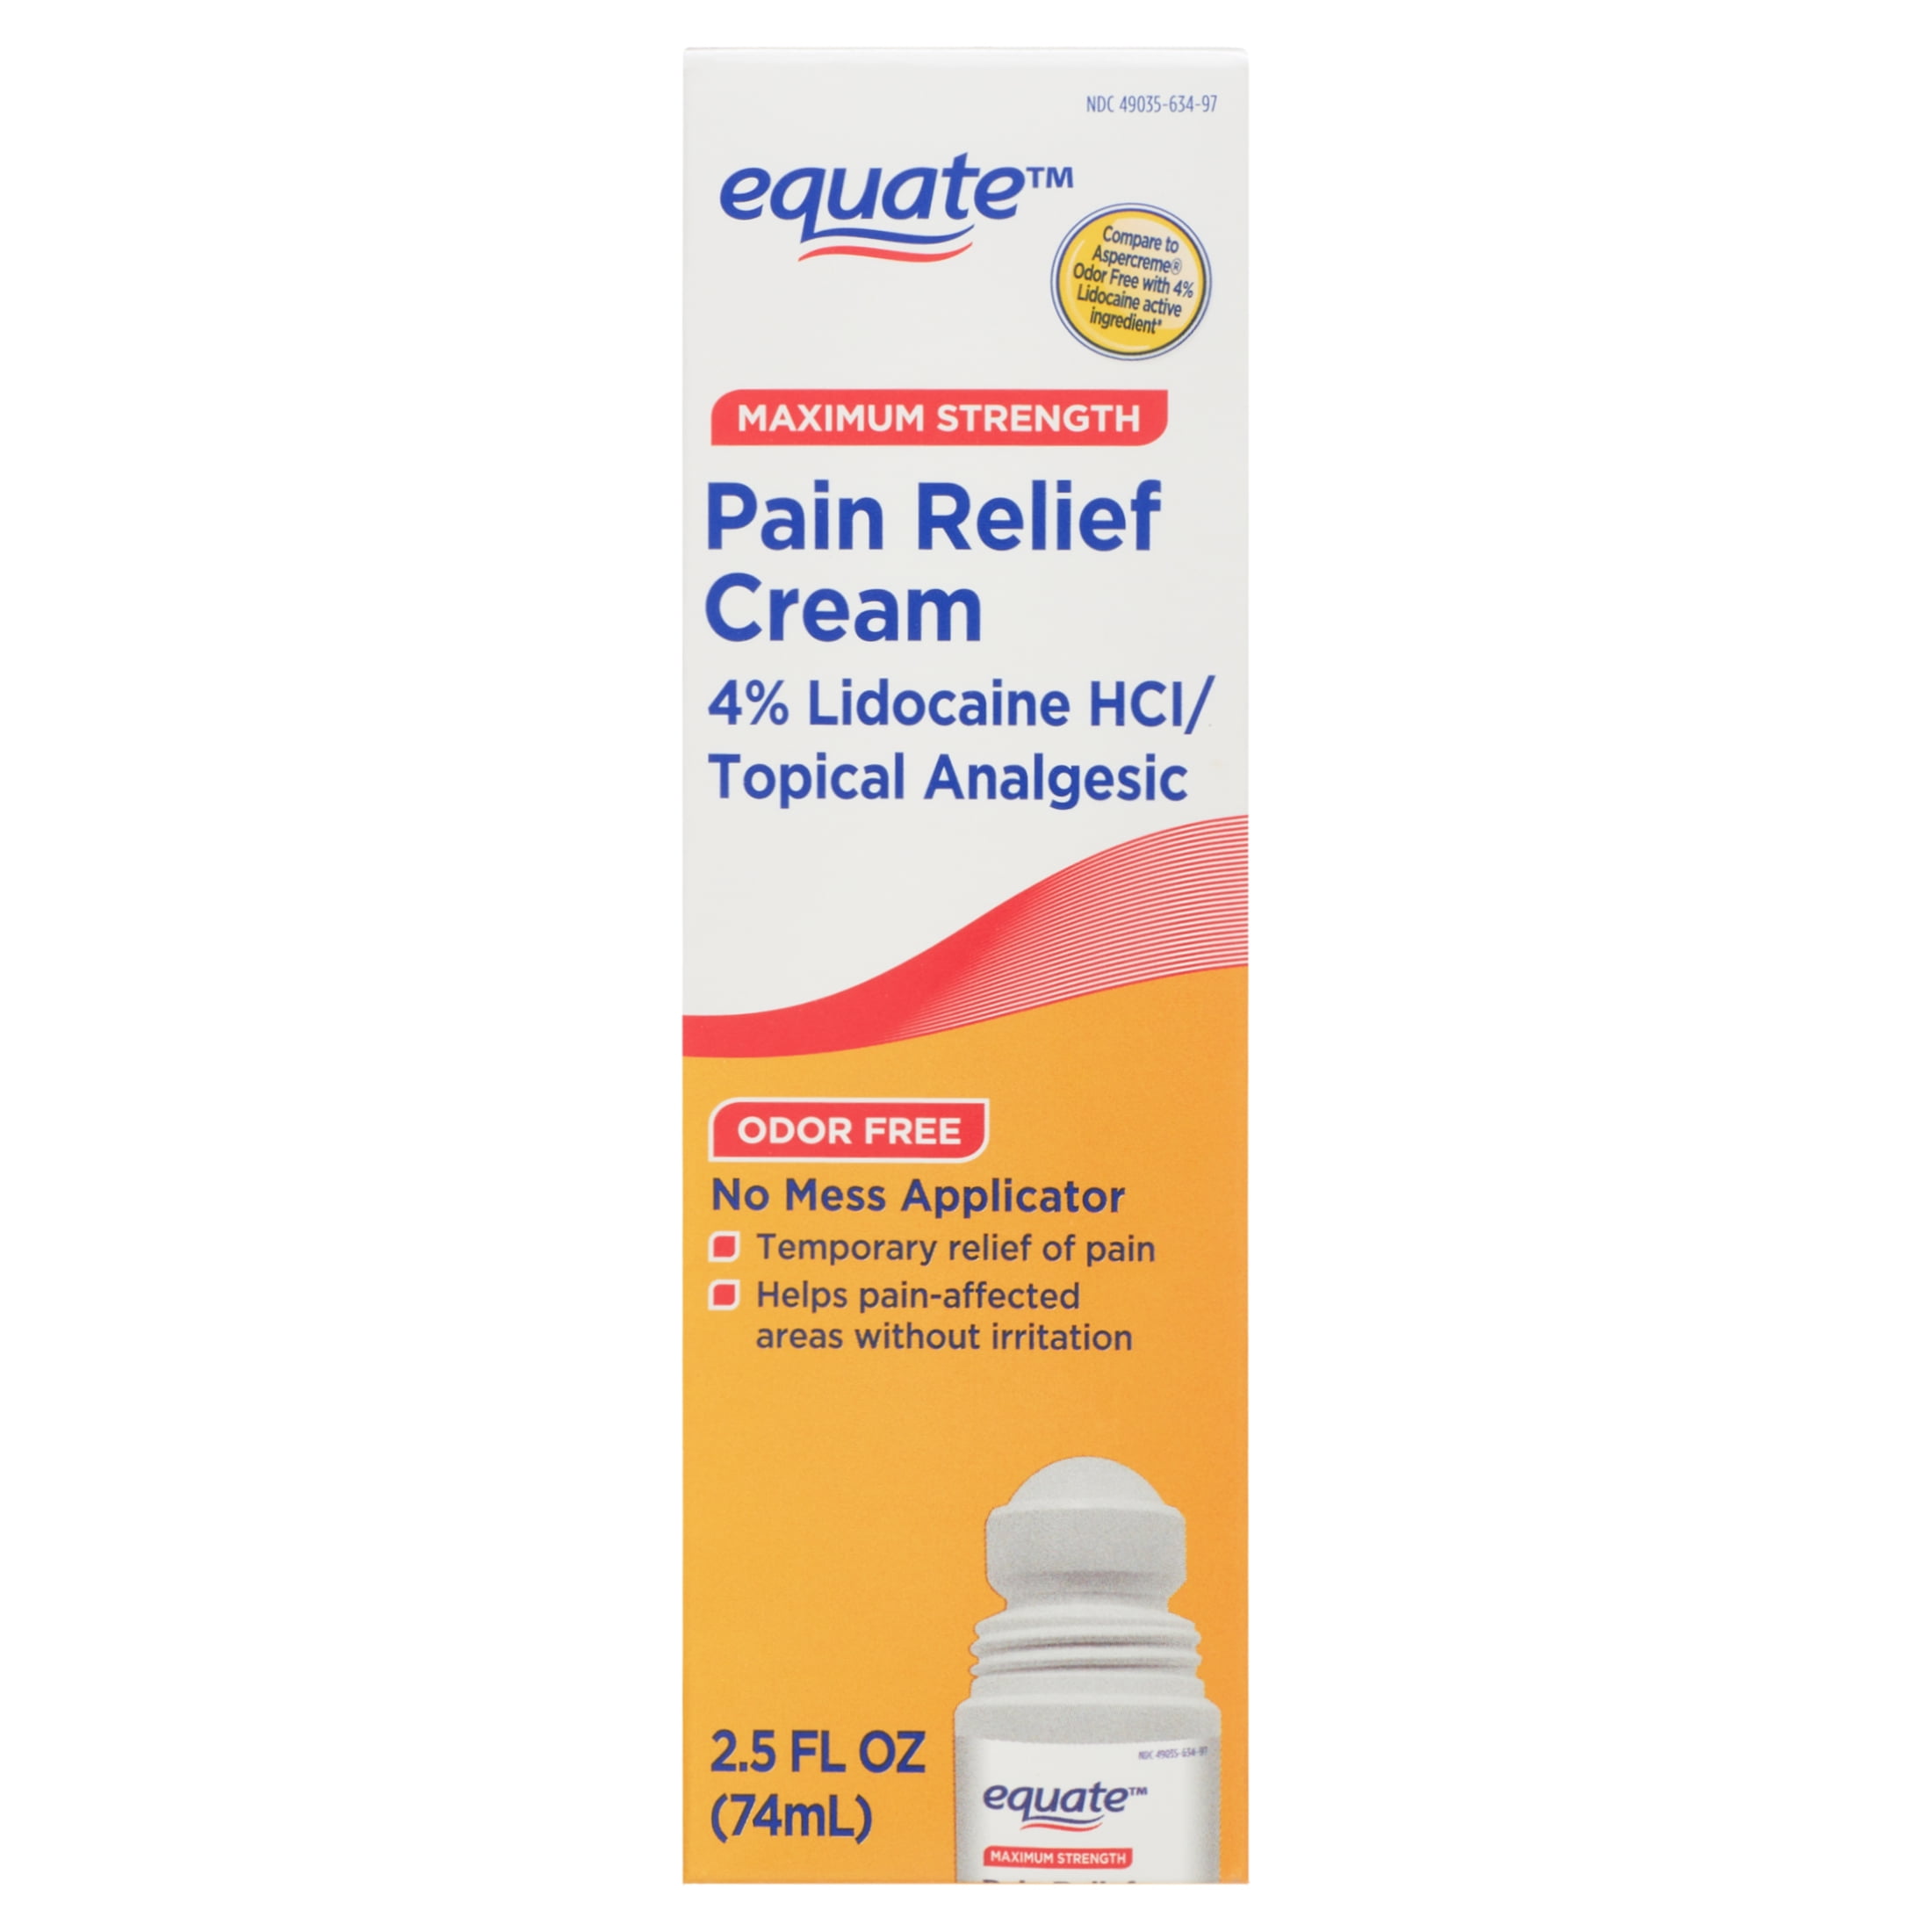 Equate Max Strength Lidocaine Pain Relief Cream for Body Aches, 2.5 fl. oz.